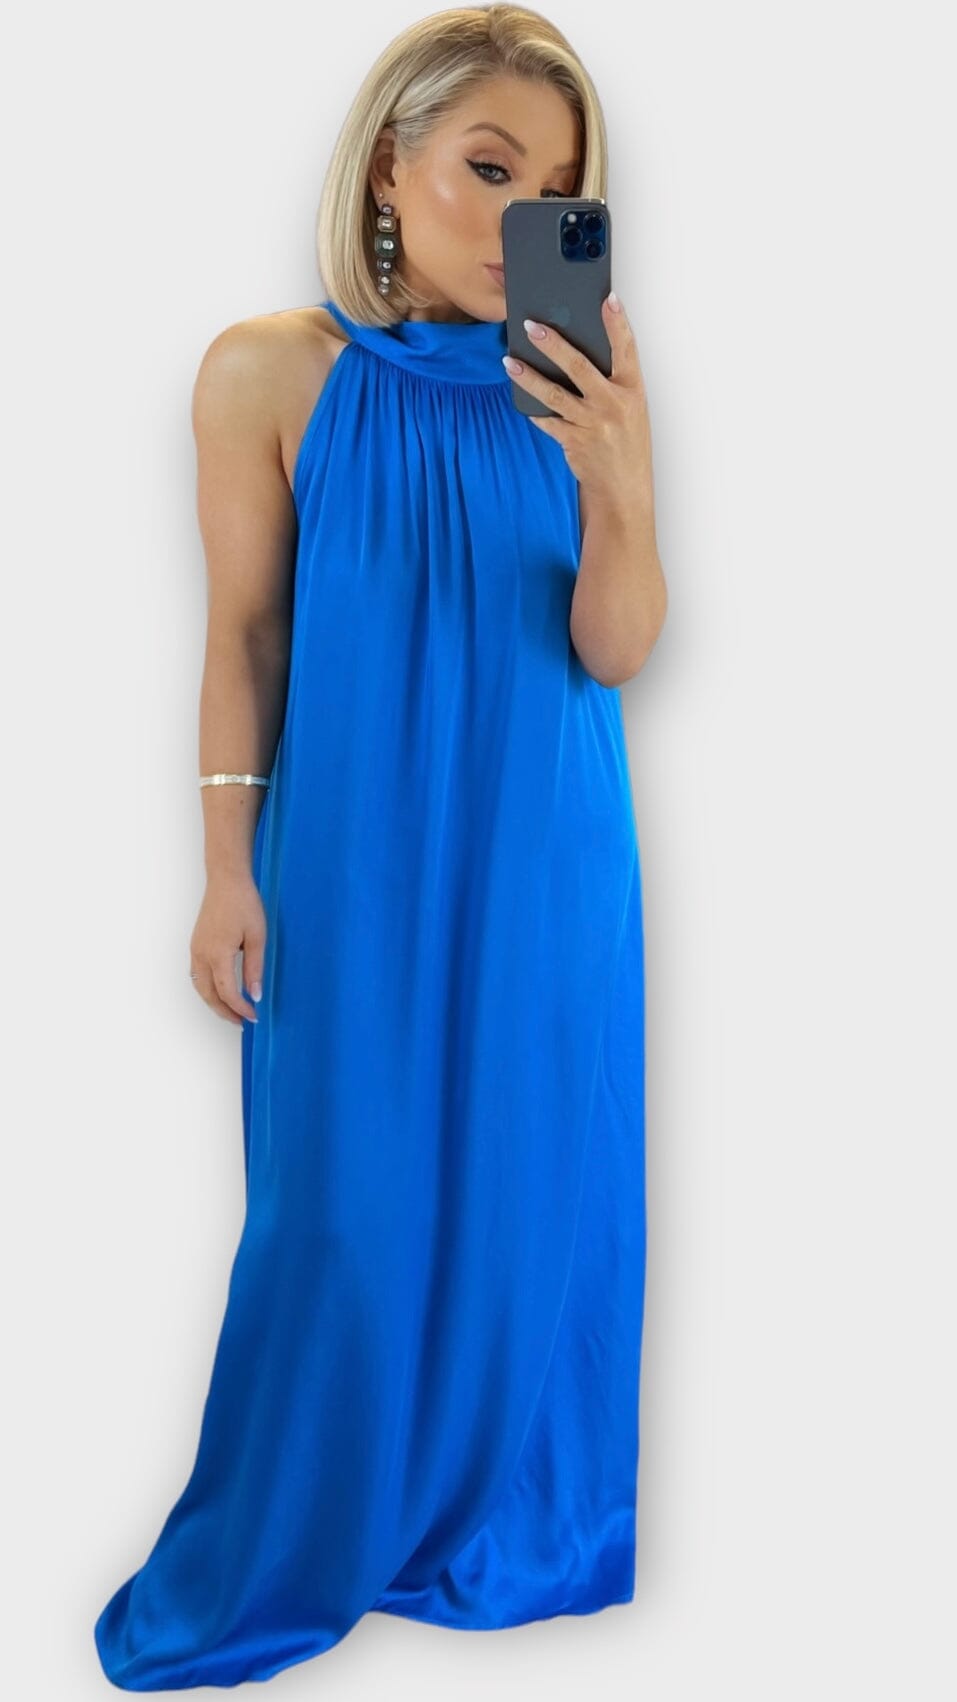 CAROLINA SILKY DRESS - ELECTRIC BLUE Coco Boutique 